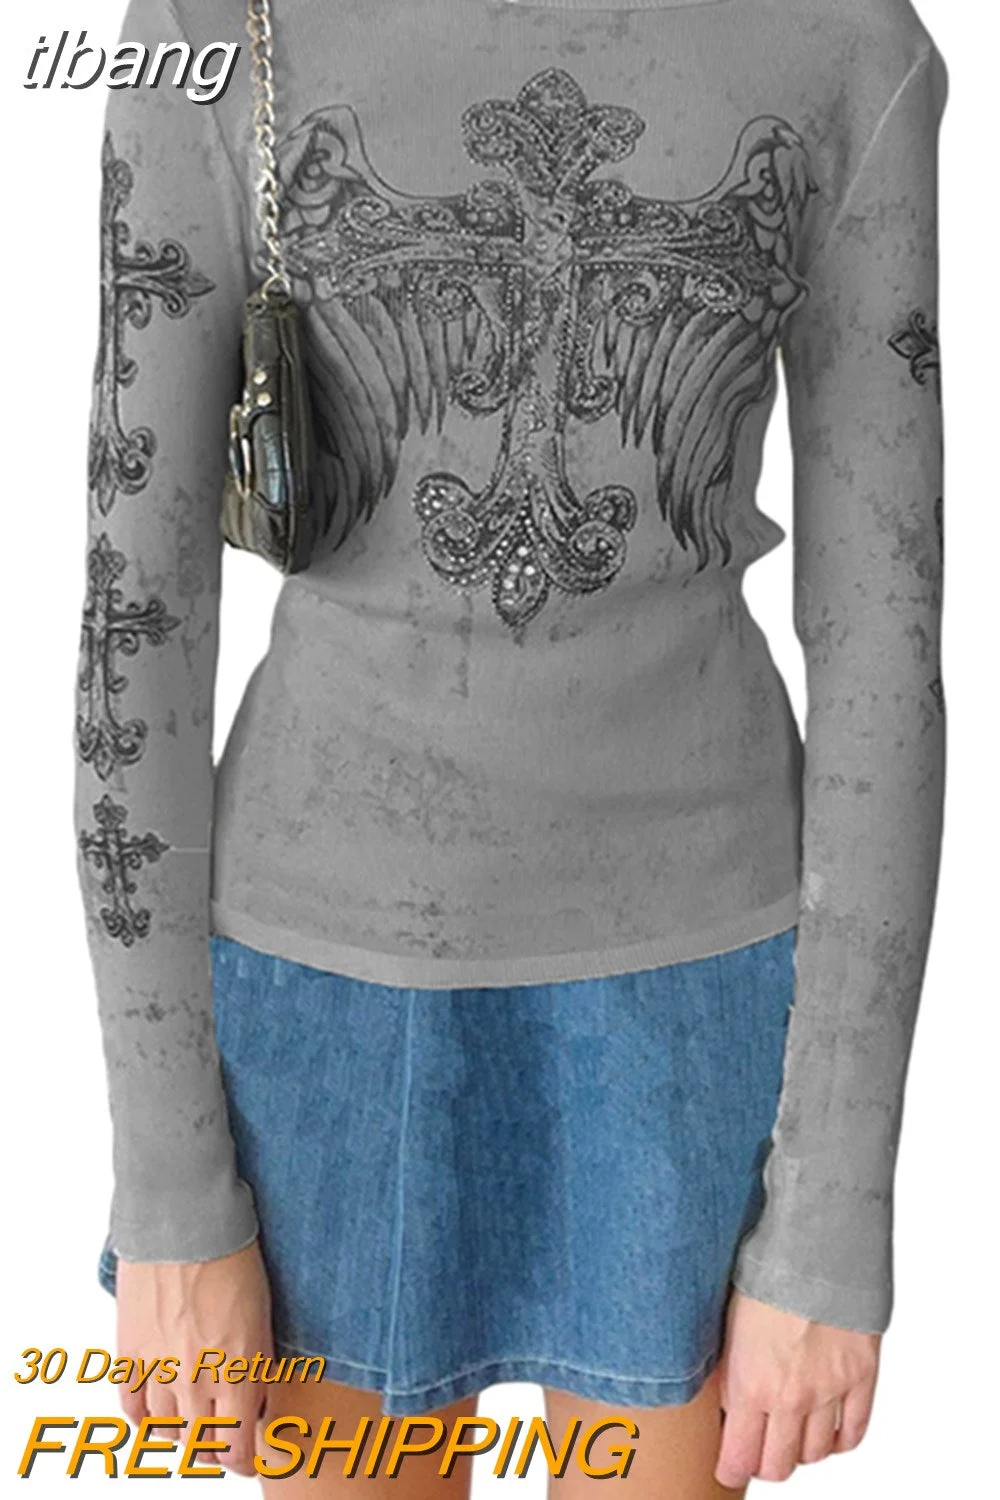 tlbang Rhinestone Top for Women 2000s Aesthetic Fairycore Grunge Long Sleeve T Shirts Graphic Cross Print Tee y2k Streetwear